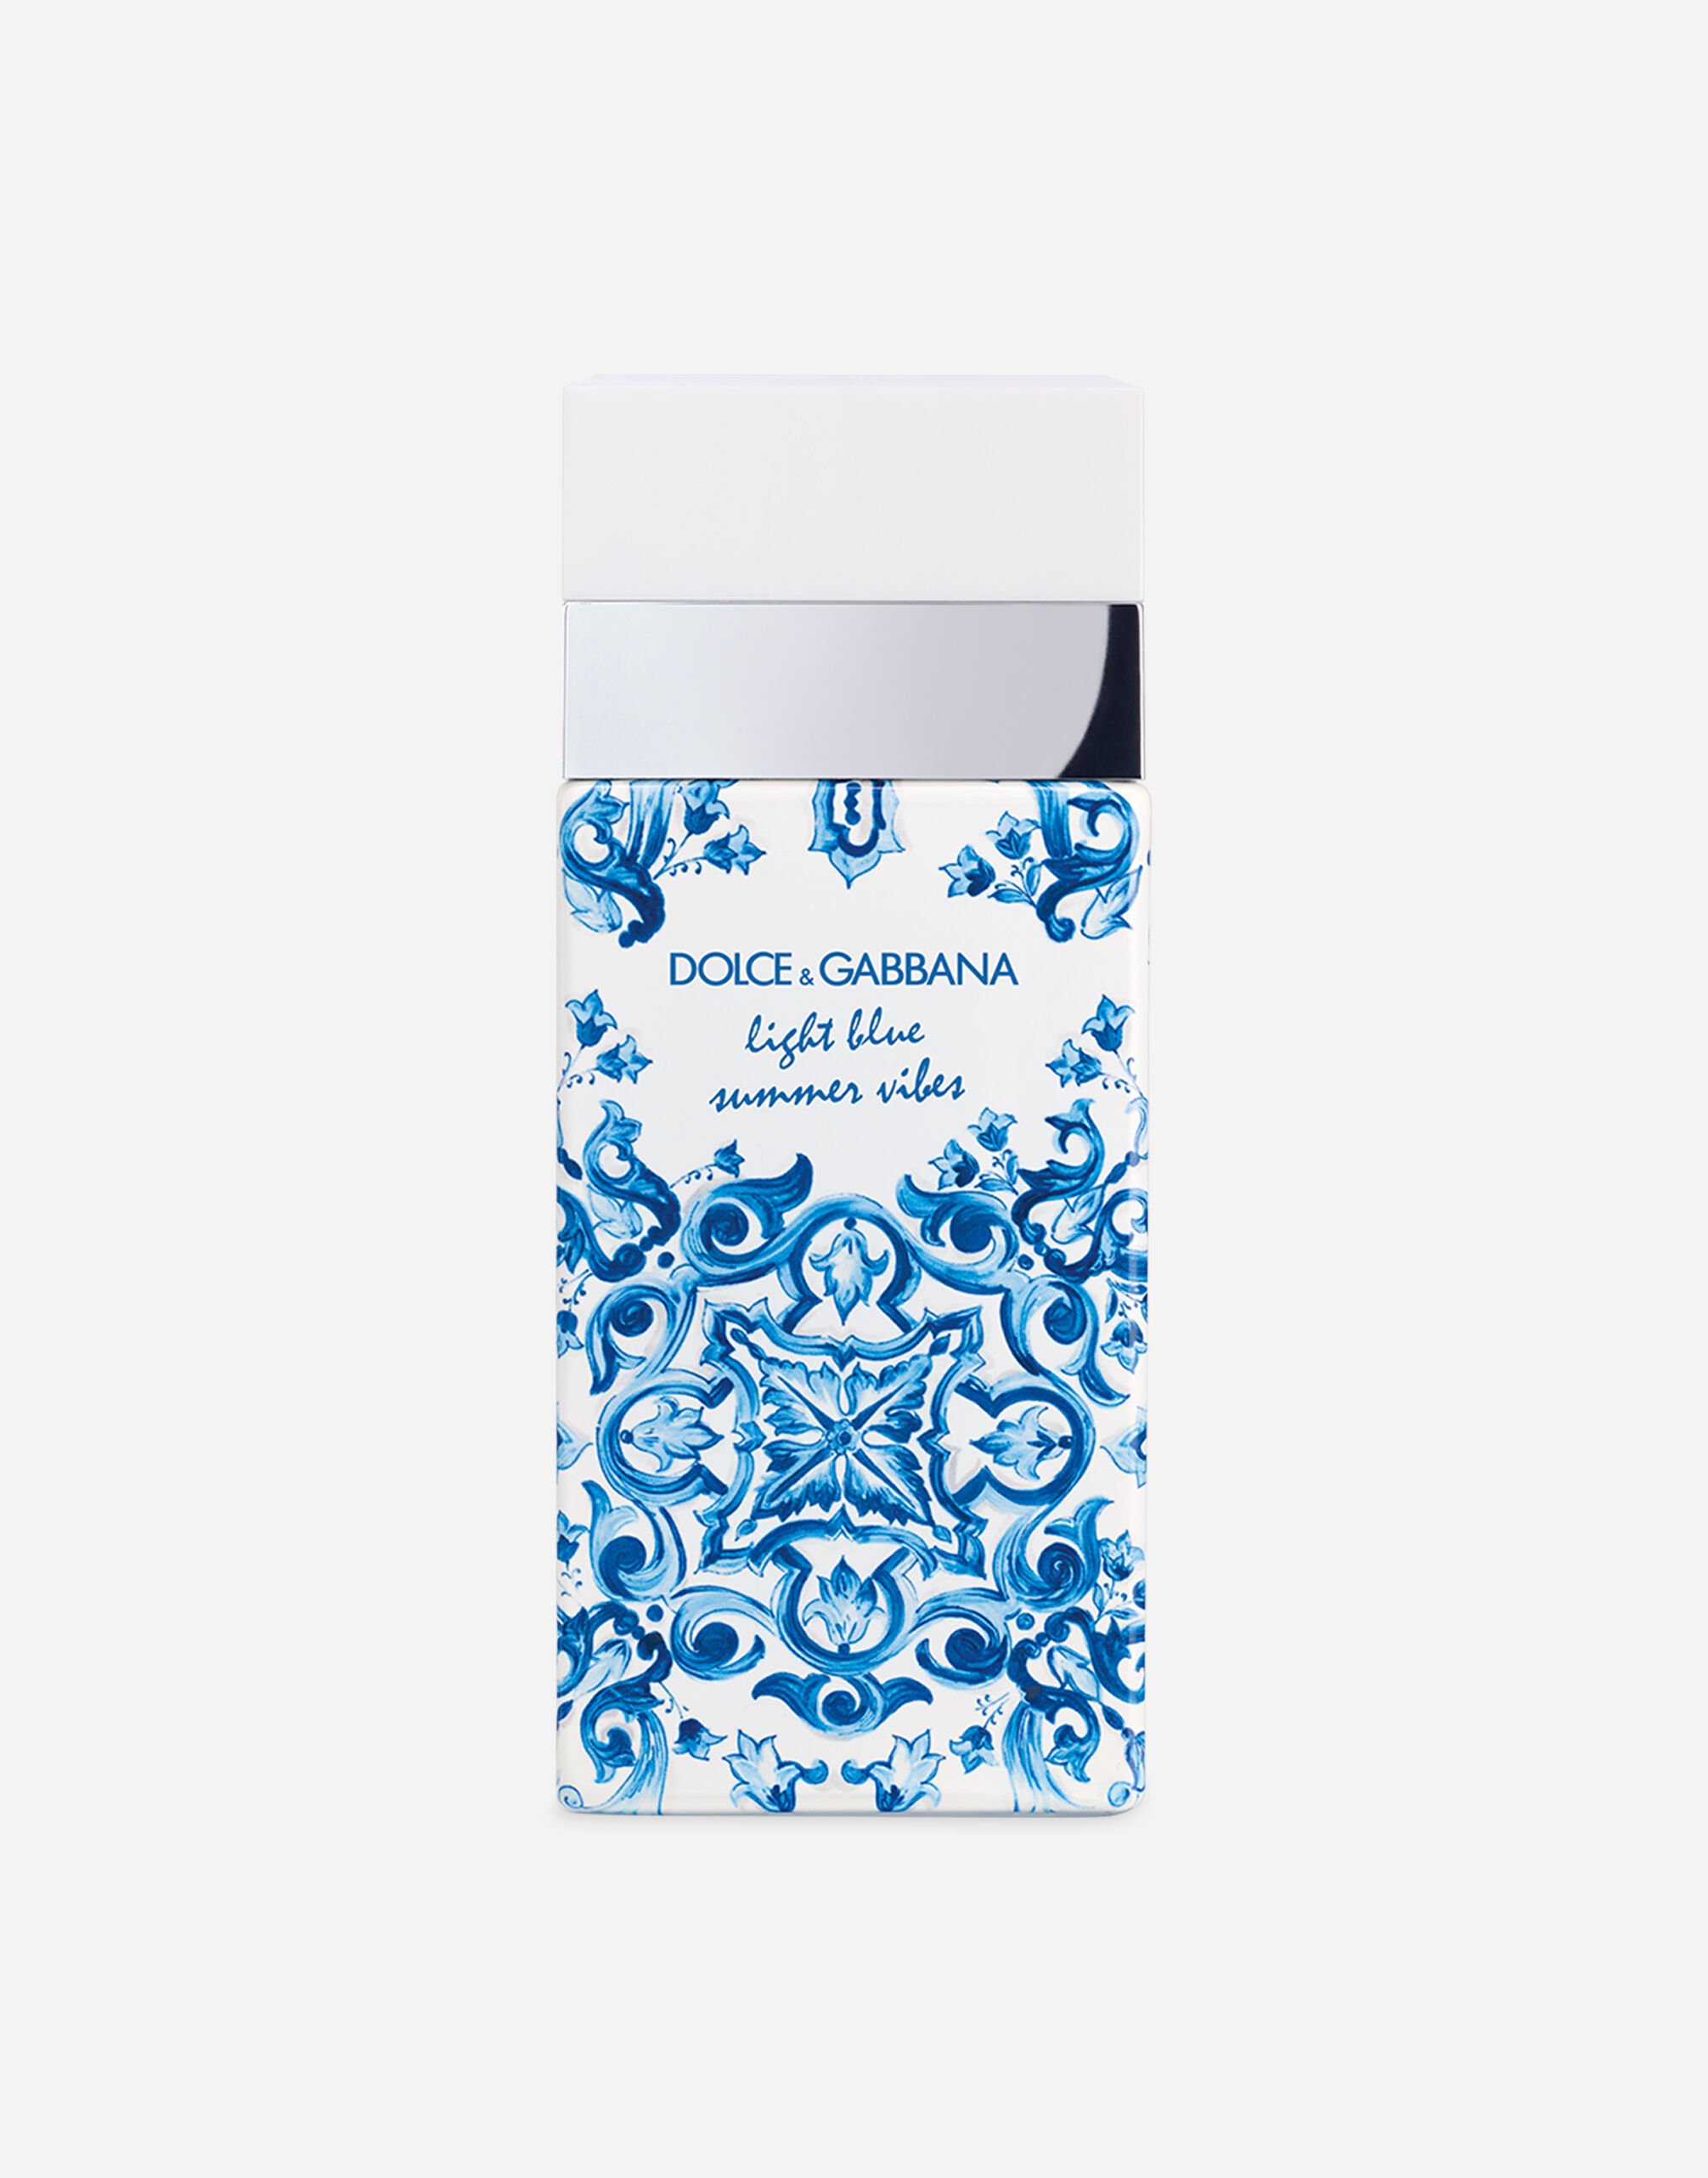 Dolce & Gabbana Light Blue Summer Vibes Eau de Toilette - VP6974VP243